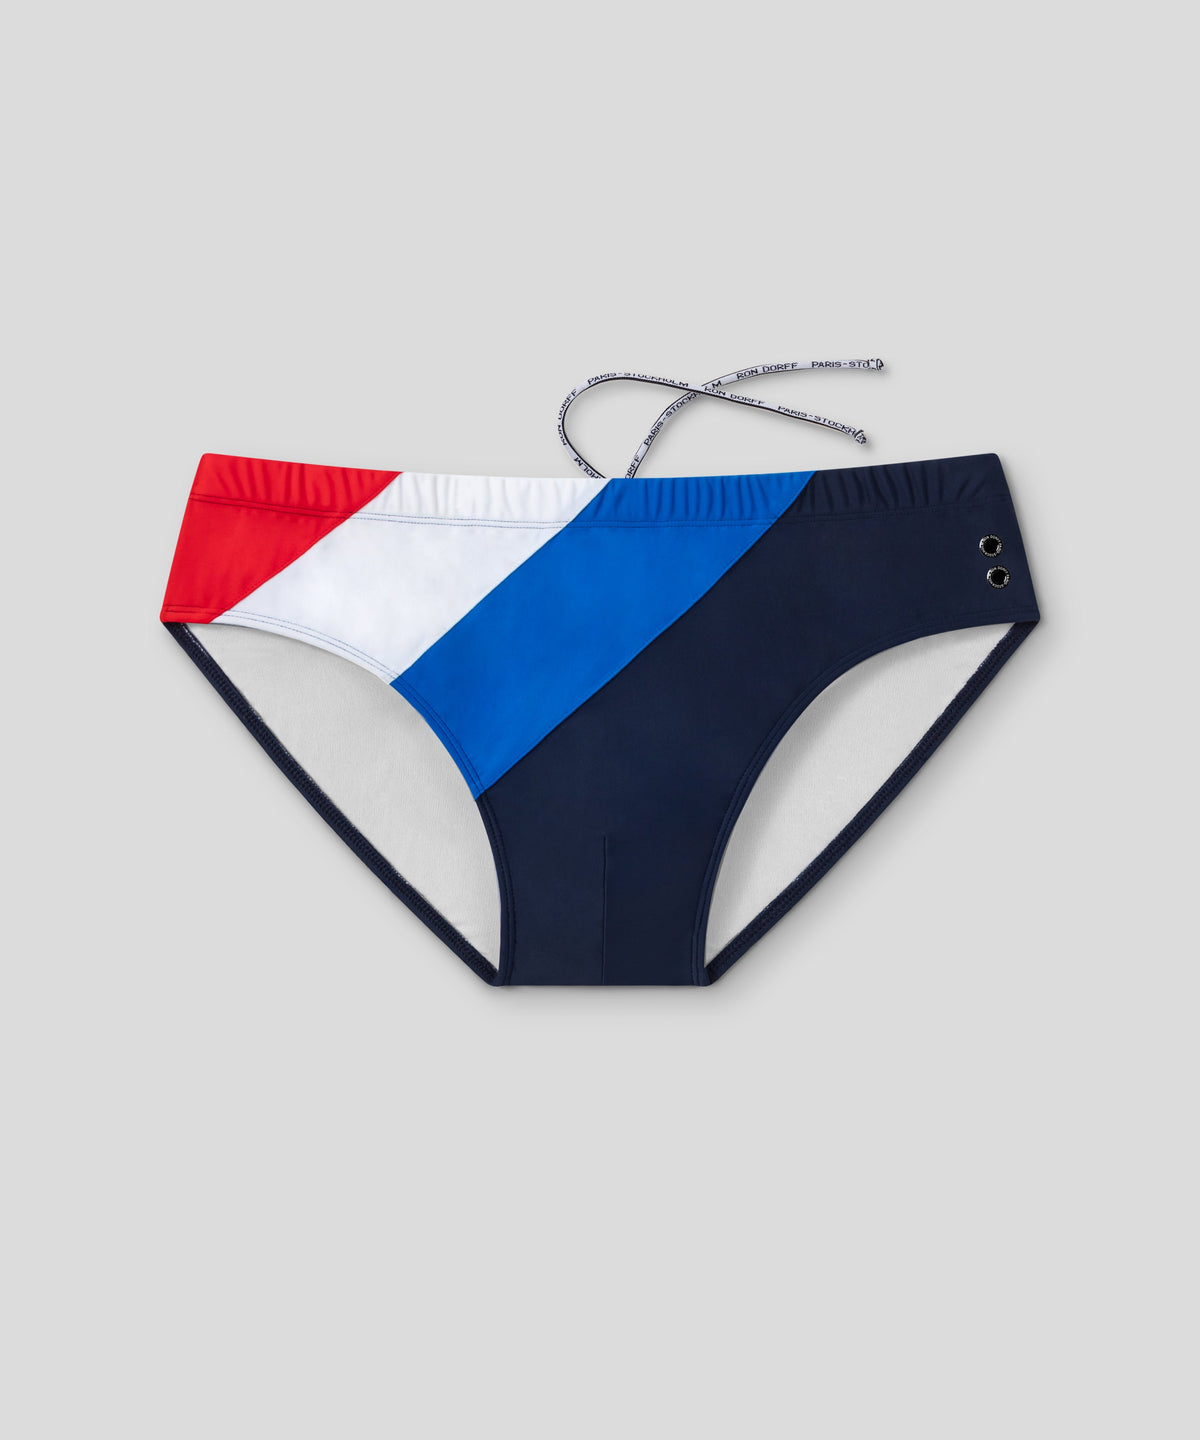 RON DORFF - Ignacio in RD striped swim briefs. Find the collection:   #RonDorff #Menswear #Swimwear #IgnacioOndategui  @ignacioondategui @smiggi